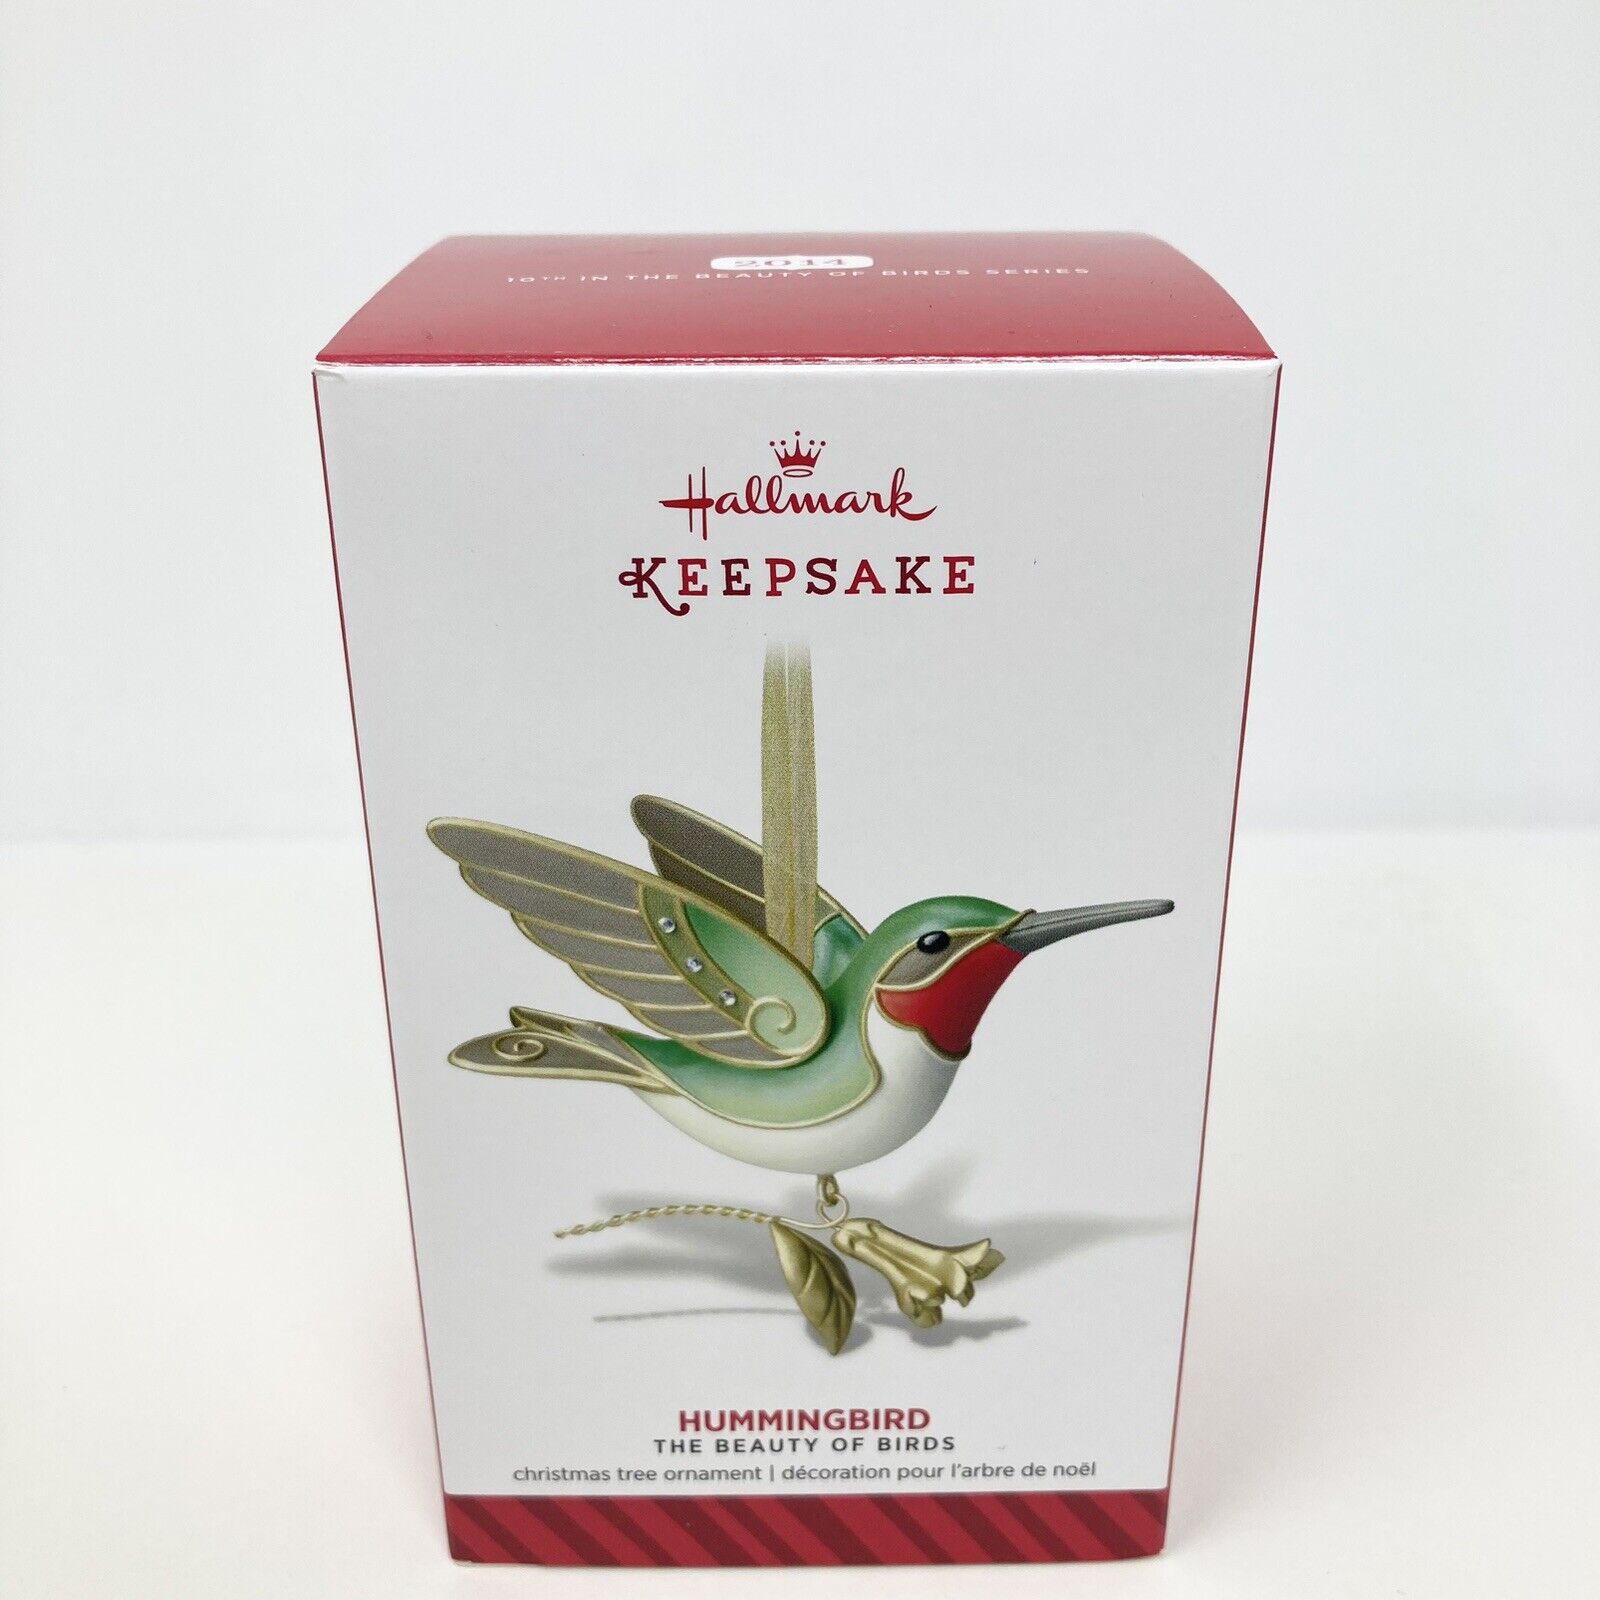 Hallmark Hummingbird Beauty of Birds 2014 Keepsake Ornament #10 in Series